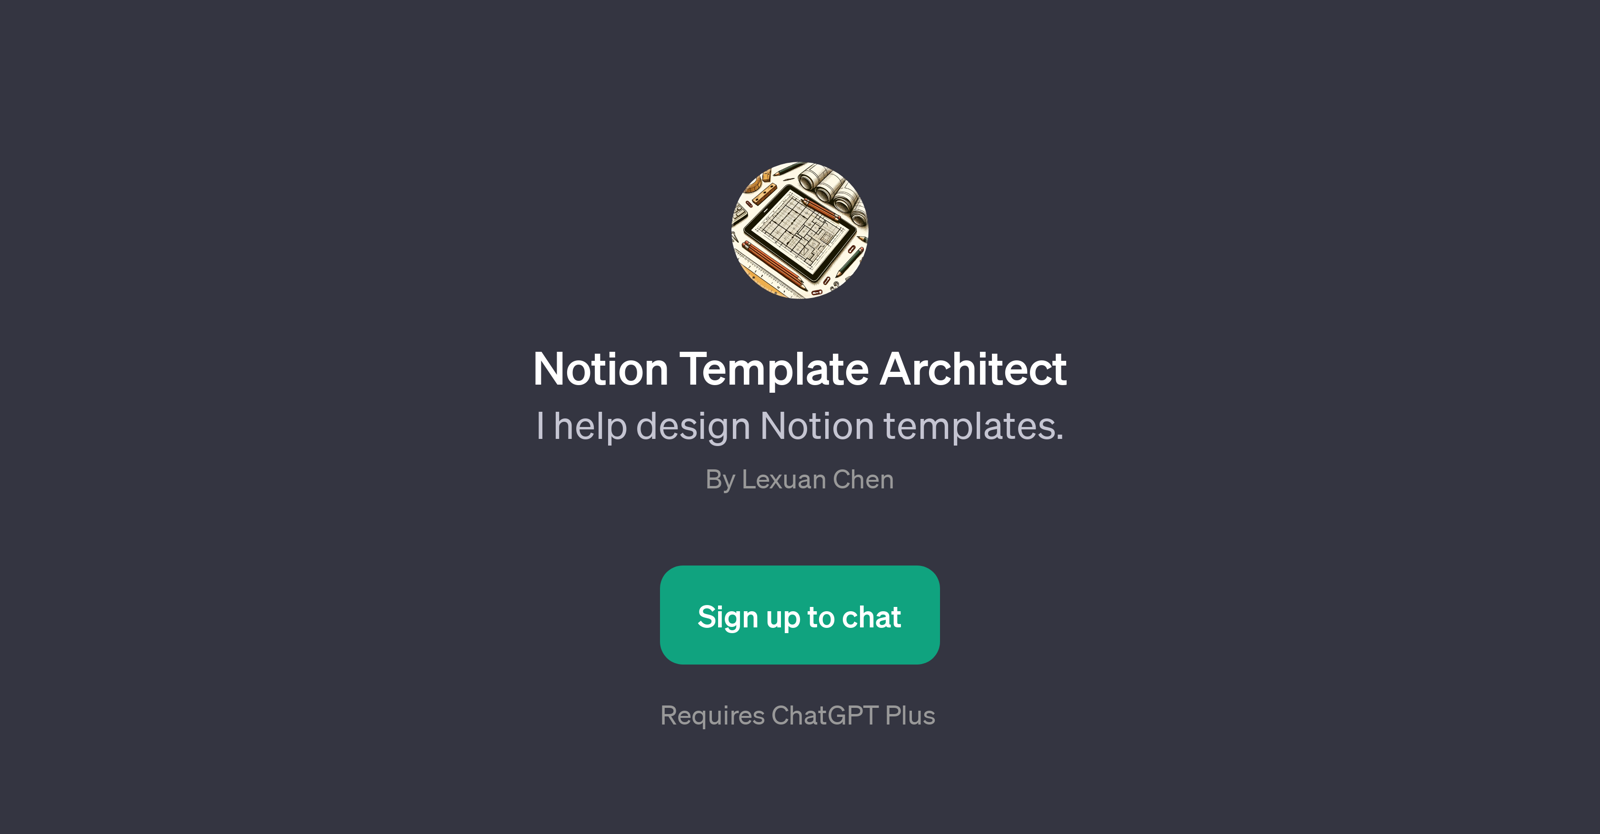 Notion Template Architect website